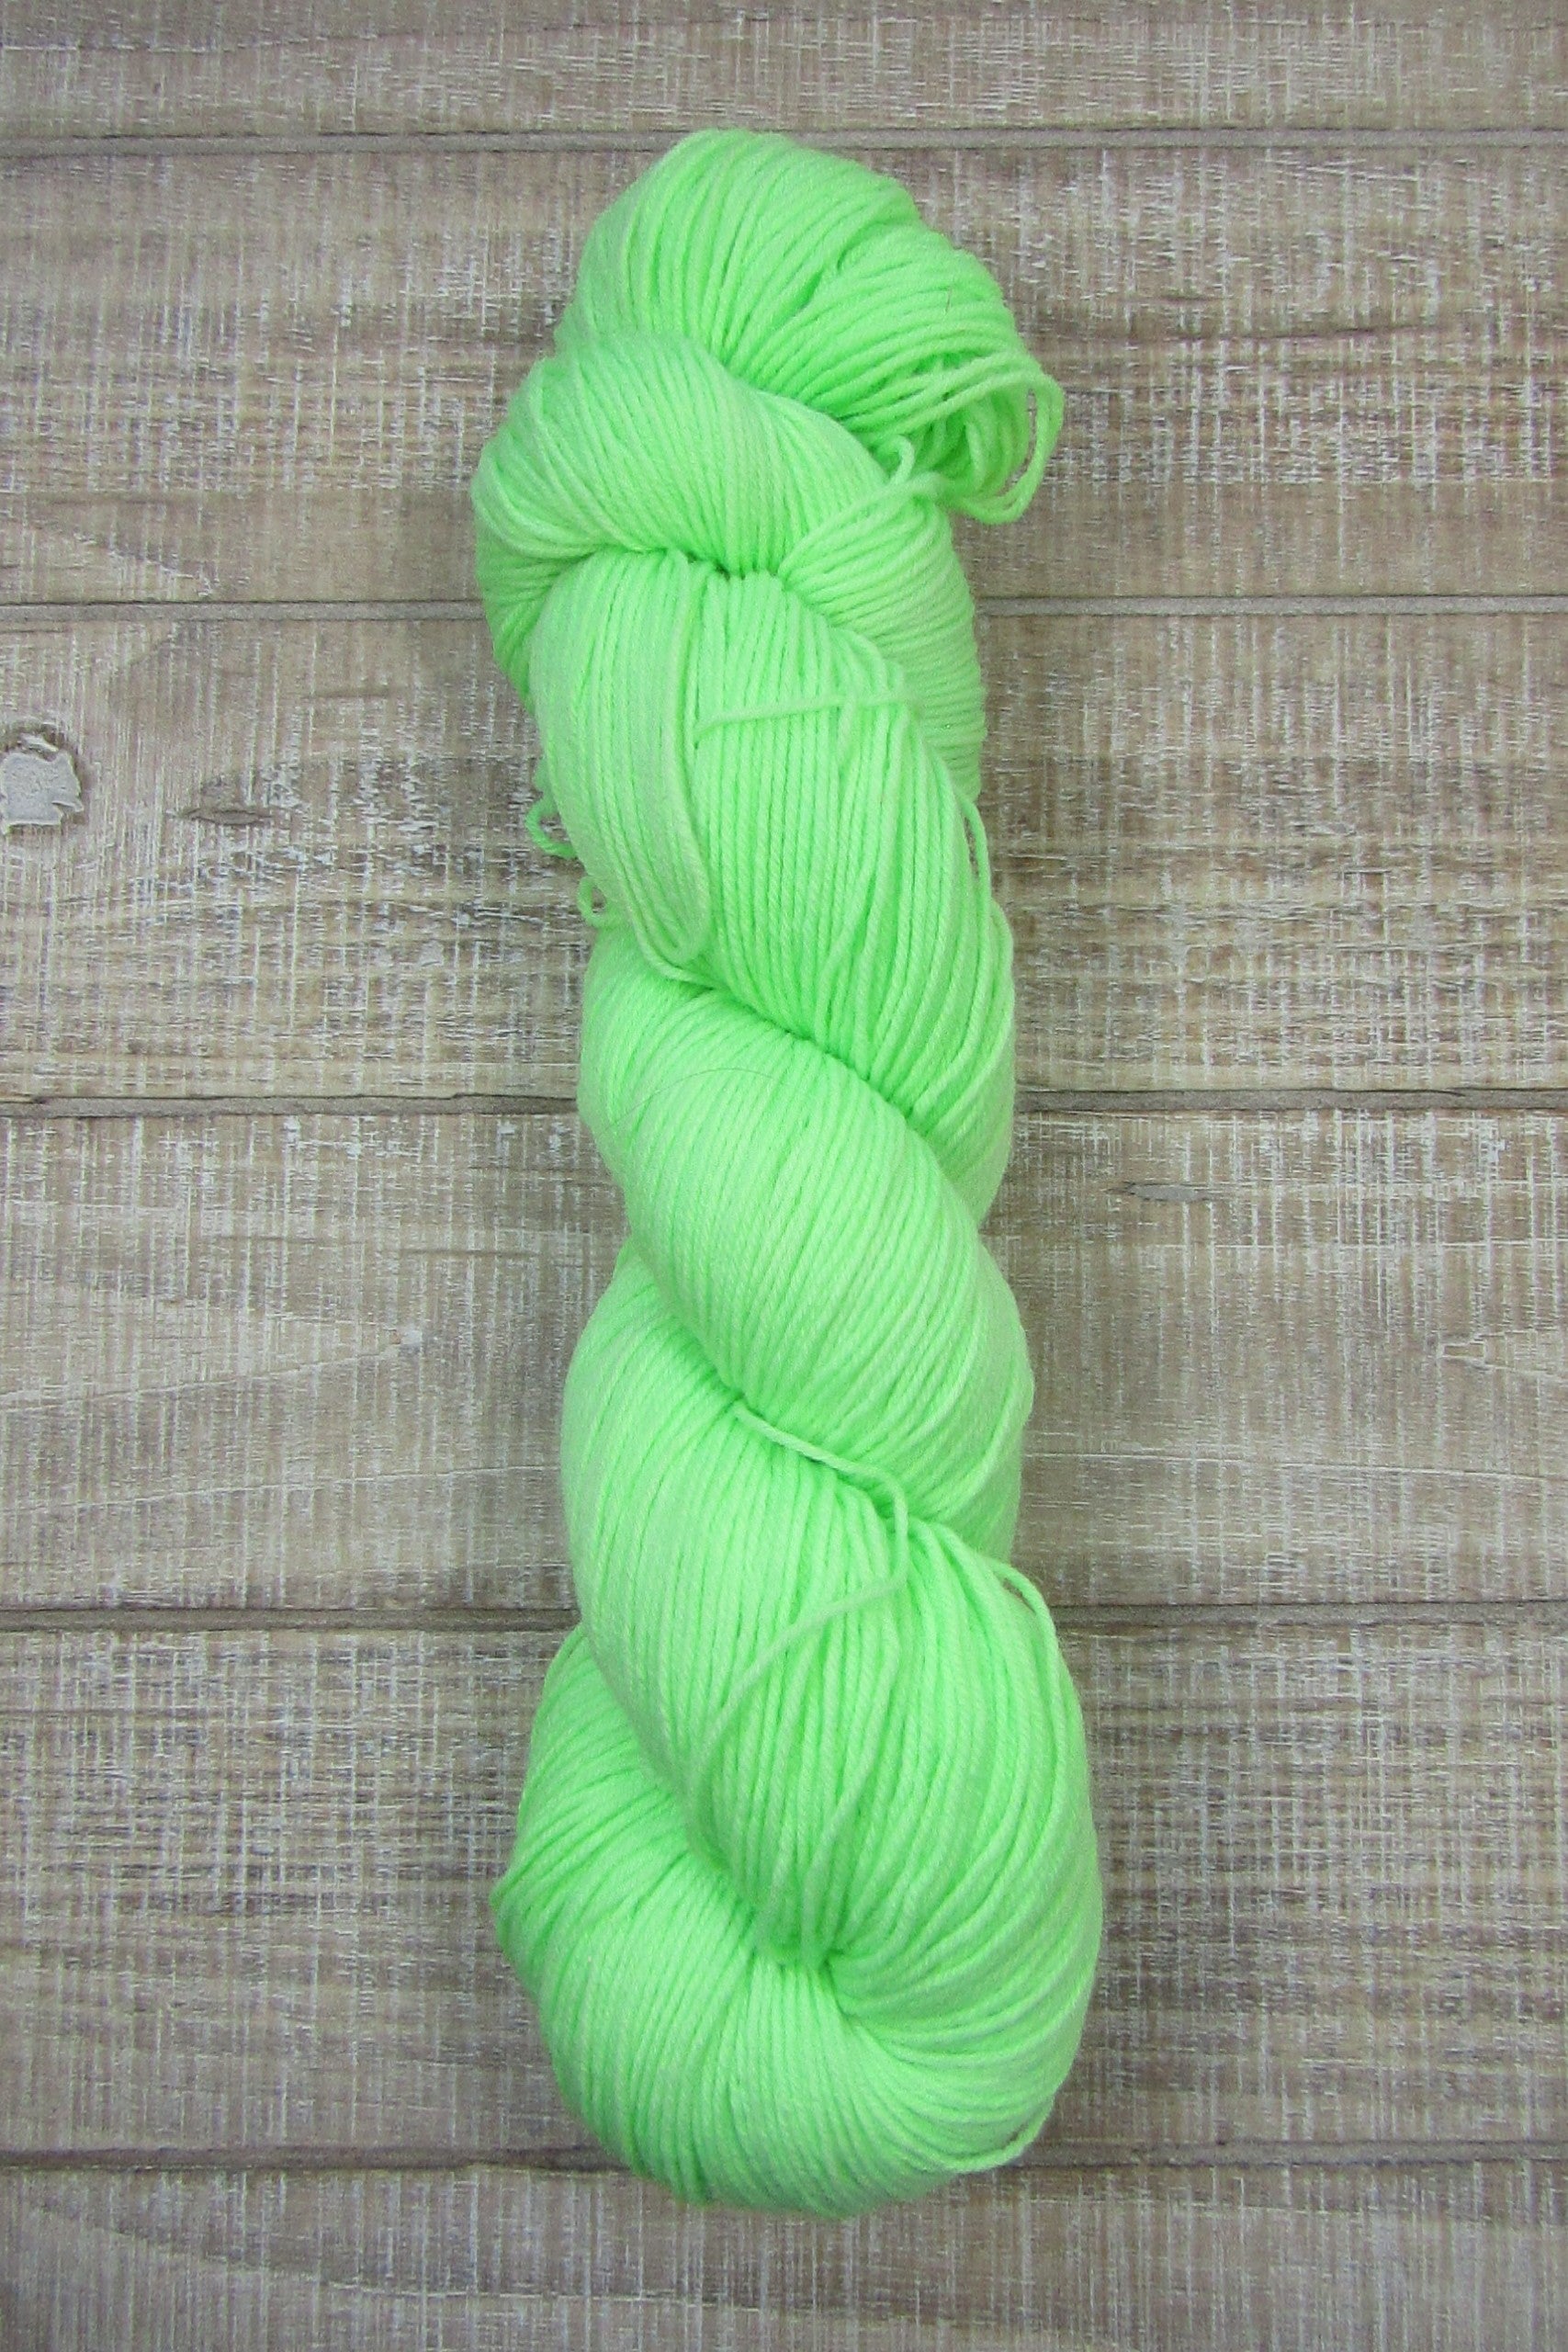 Hand-Dyed Yarn in Kelly green.